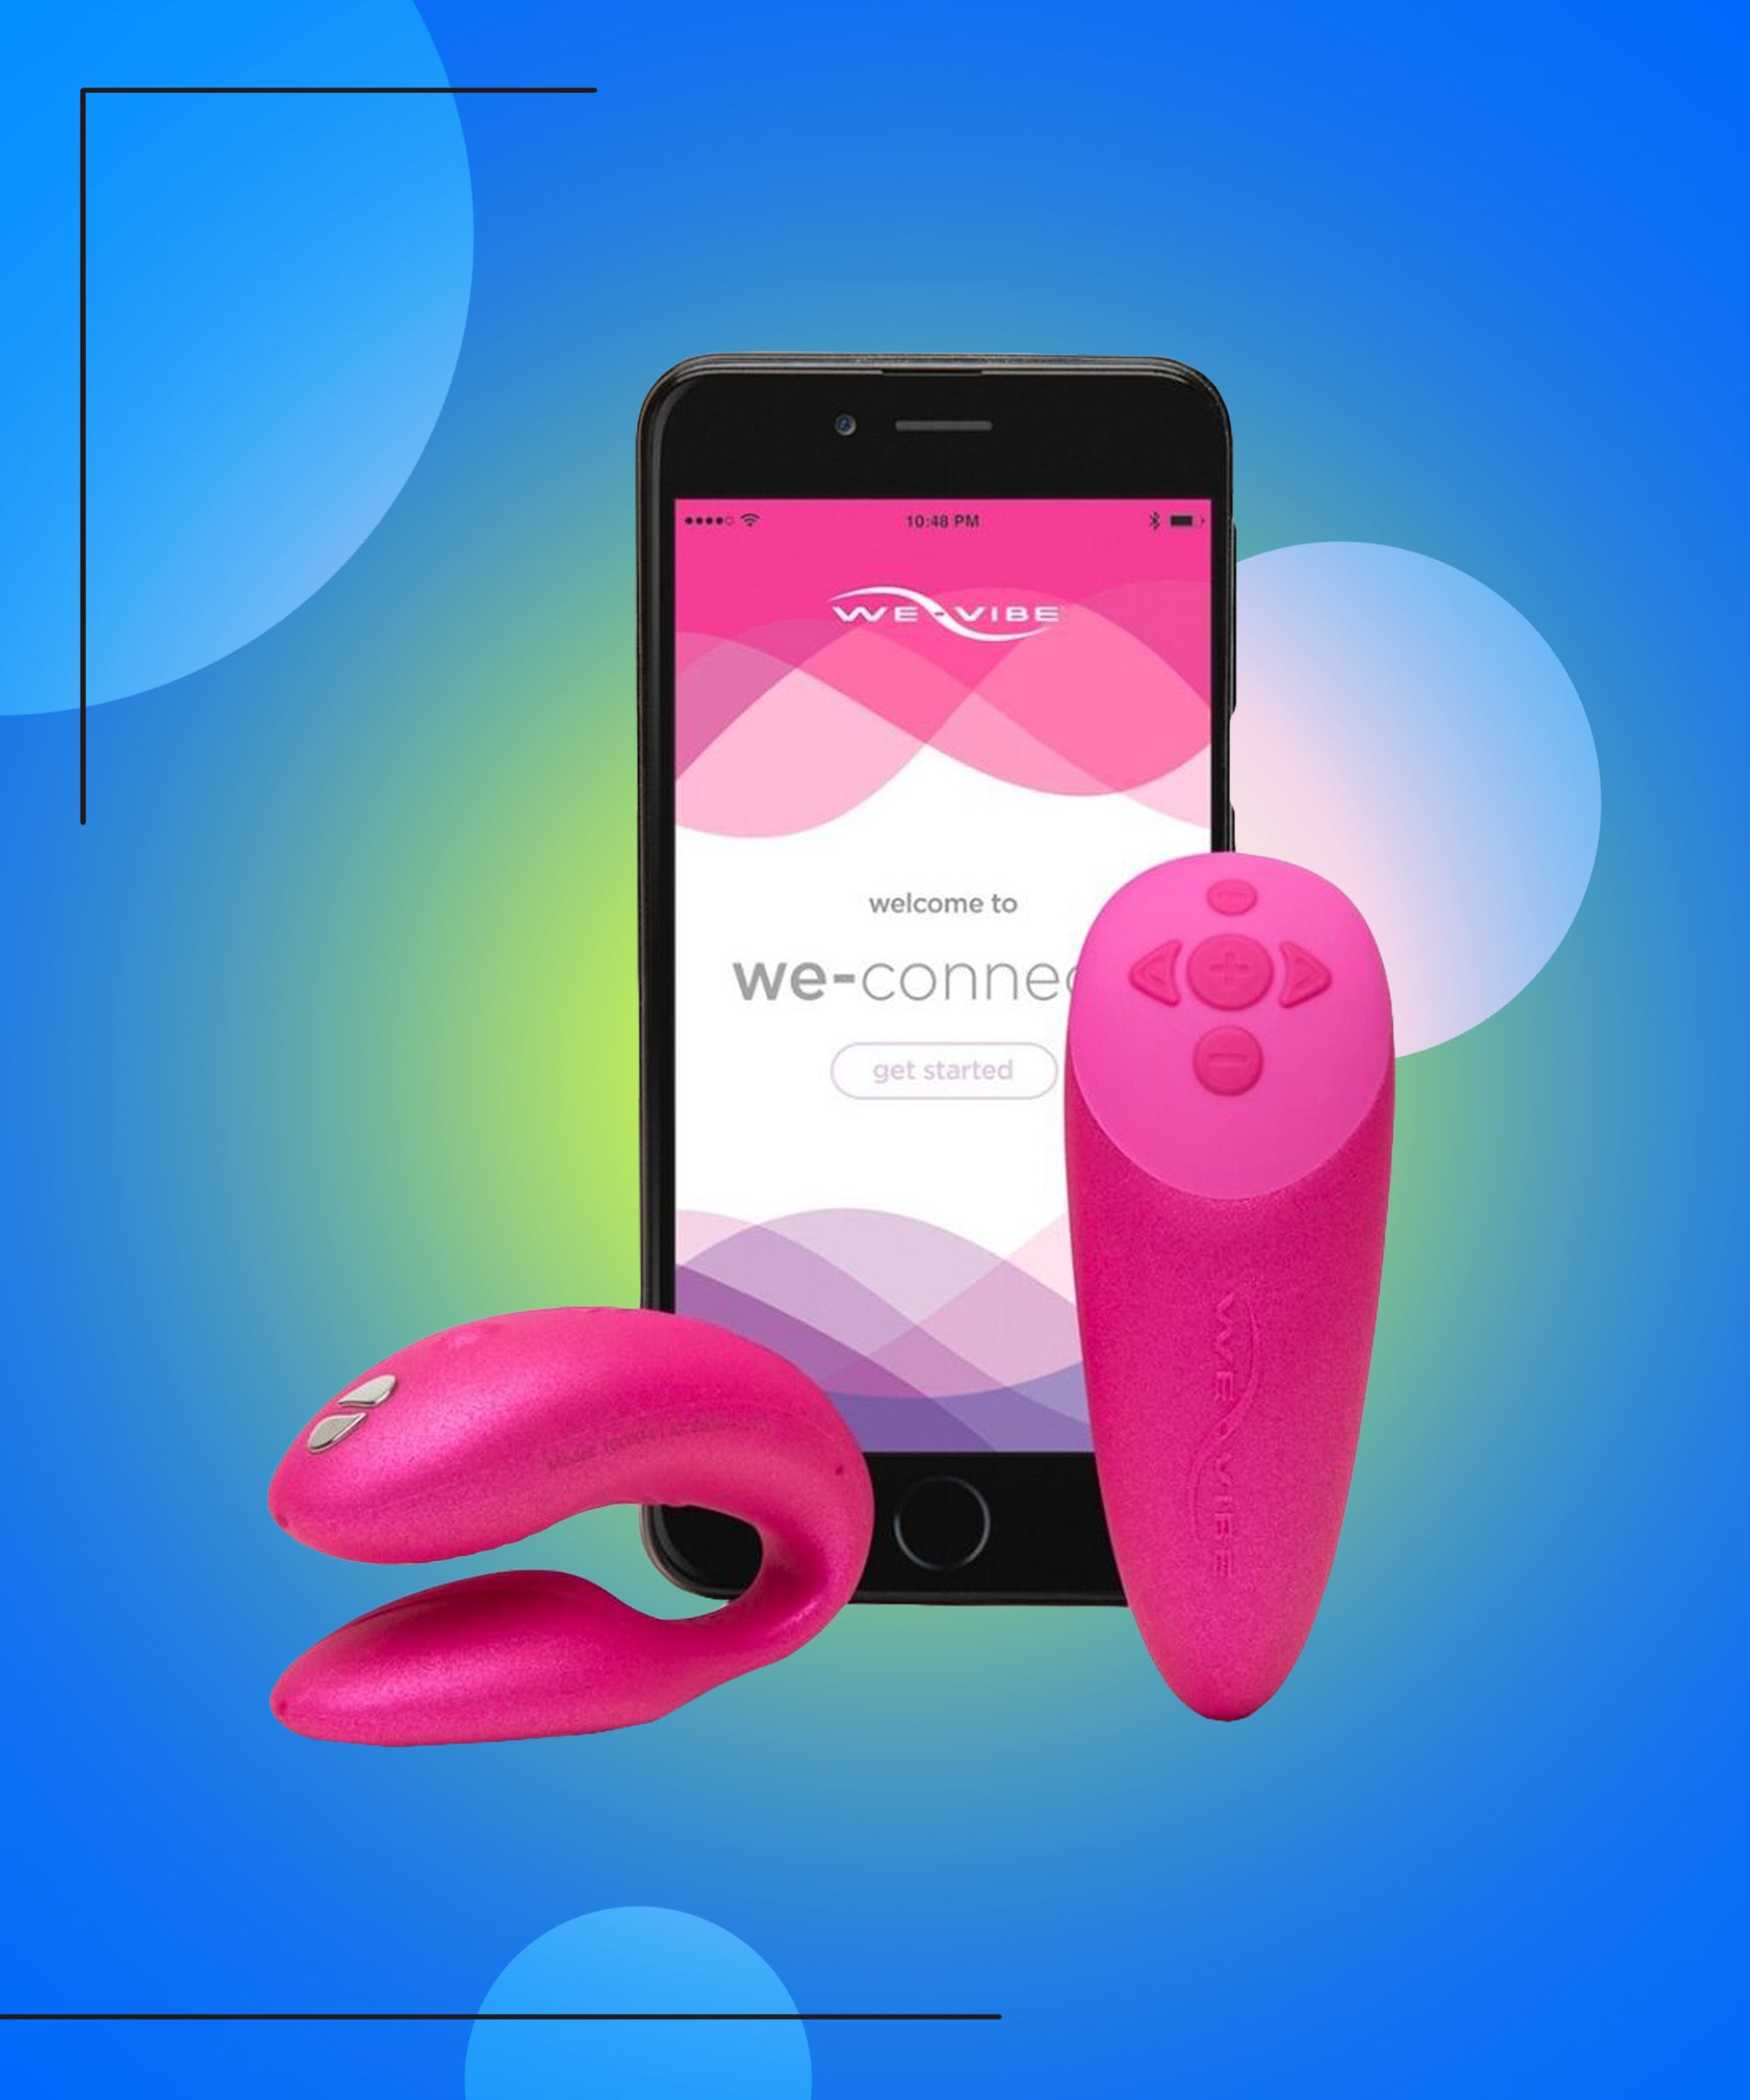 Must Need This Bluetooth App Vibrator Sex